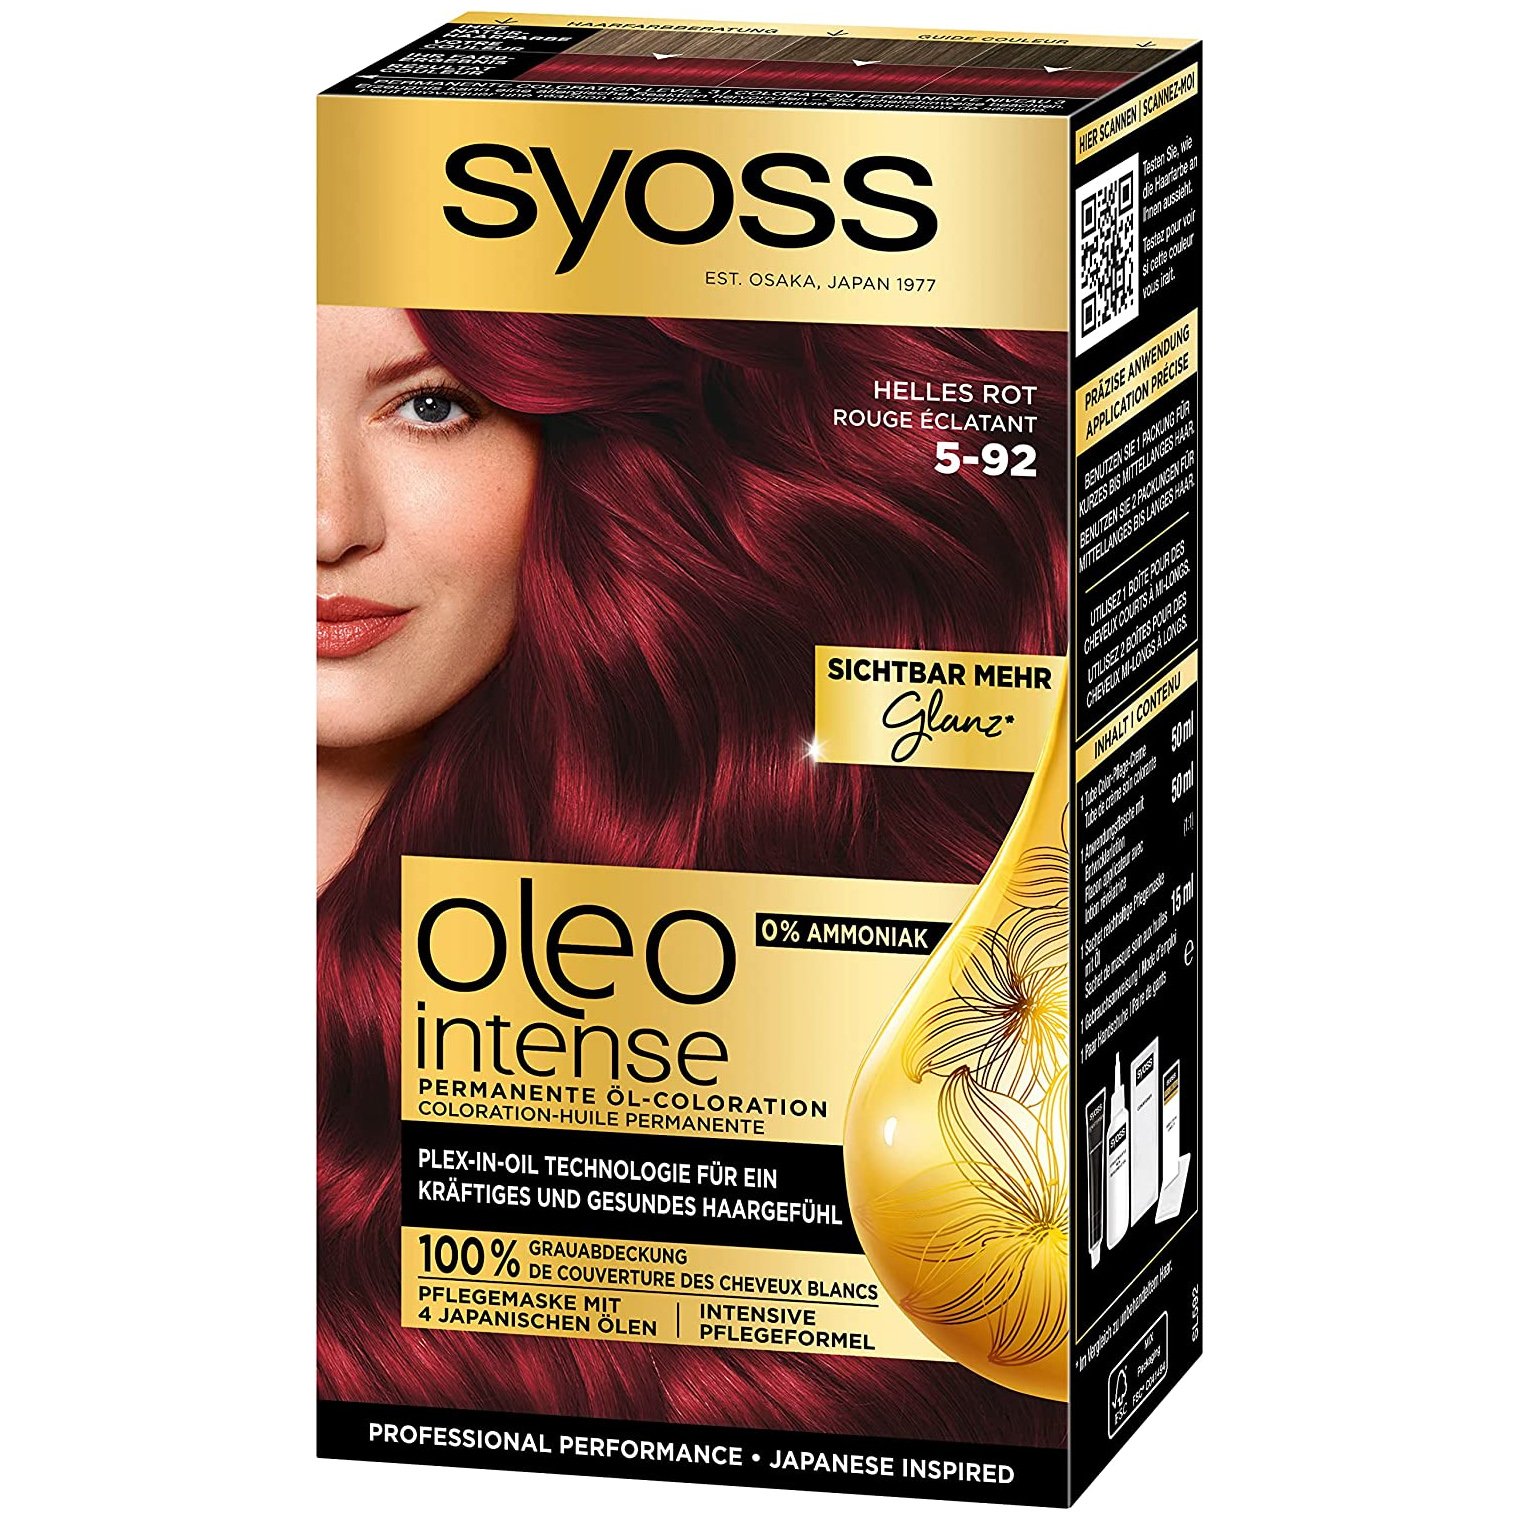 Syoss Oleo Intense Permanent Oil Hair Color Kit Επαγγελματική Μόνιμη Βαφή Μαλλιών για Εξαιρετική Κάλυψη & Έντονο Χρώμα που Διαρκεί, Χωρίς Αμμωνία 1 Τεμάχιο – 5-92 Φωτεινό Κόκκινο